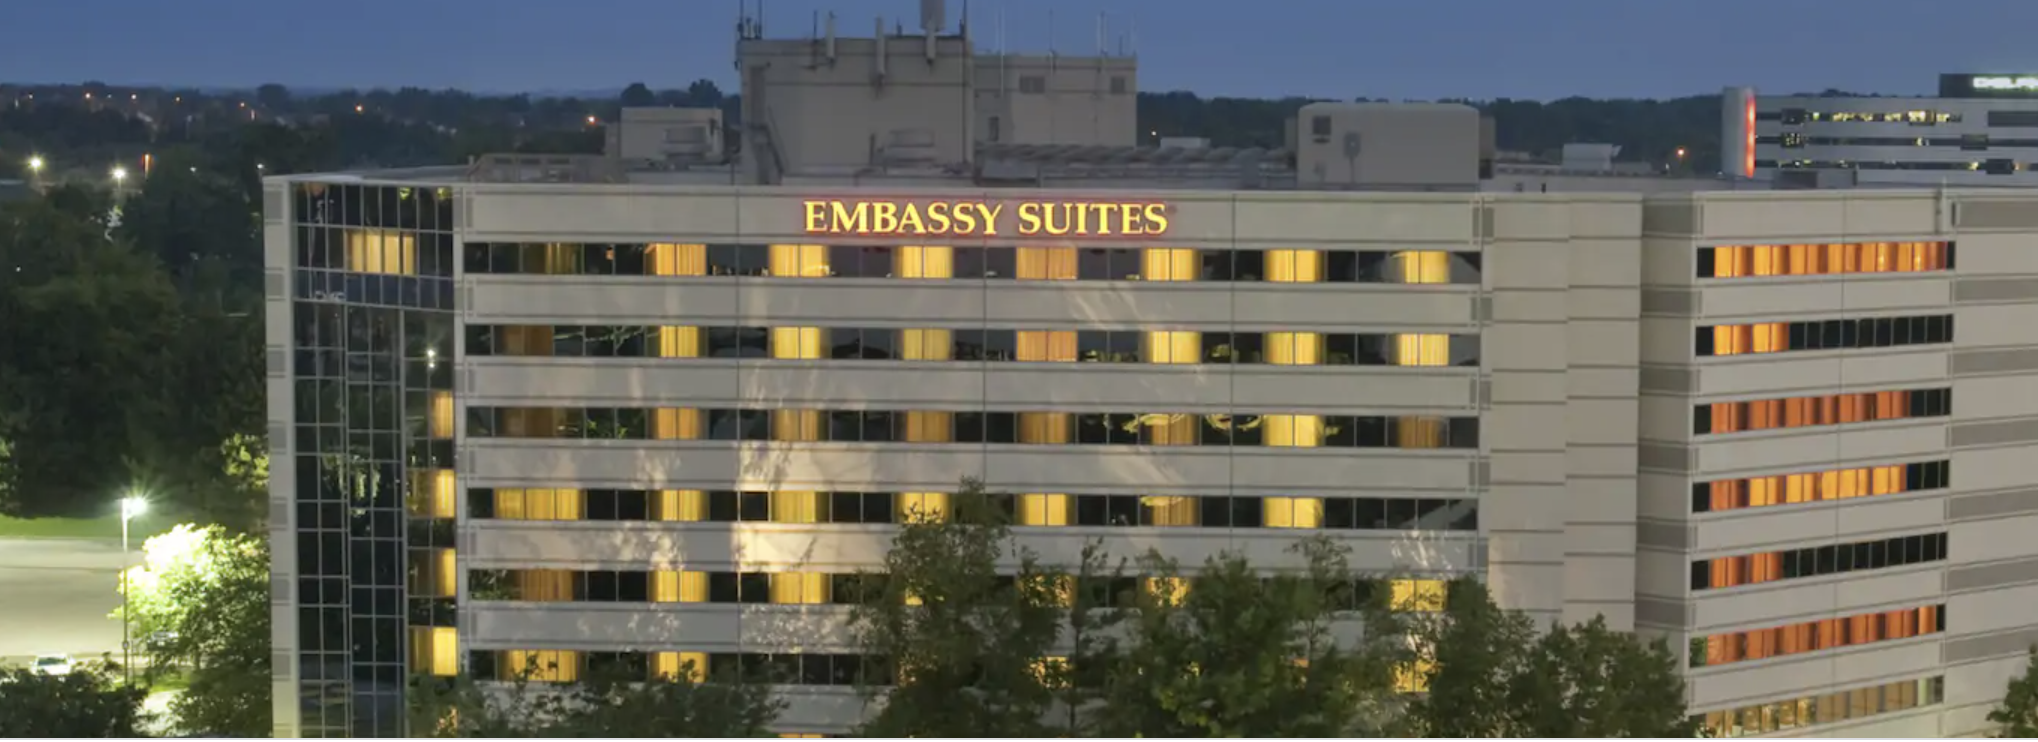 Embassy Suites by Hilton Detroit TroyAuburn Hills